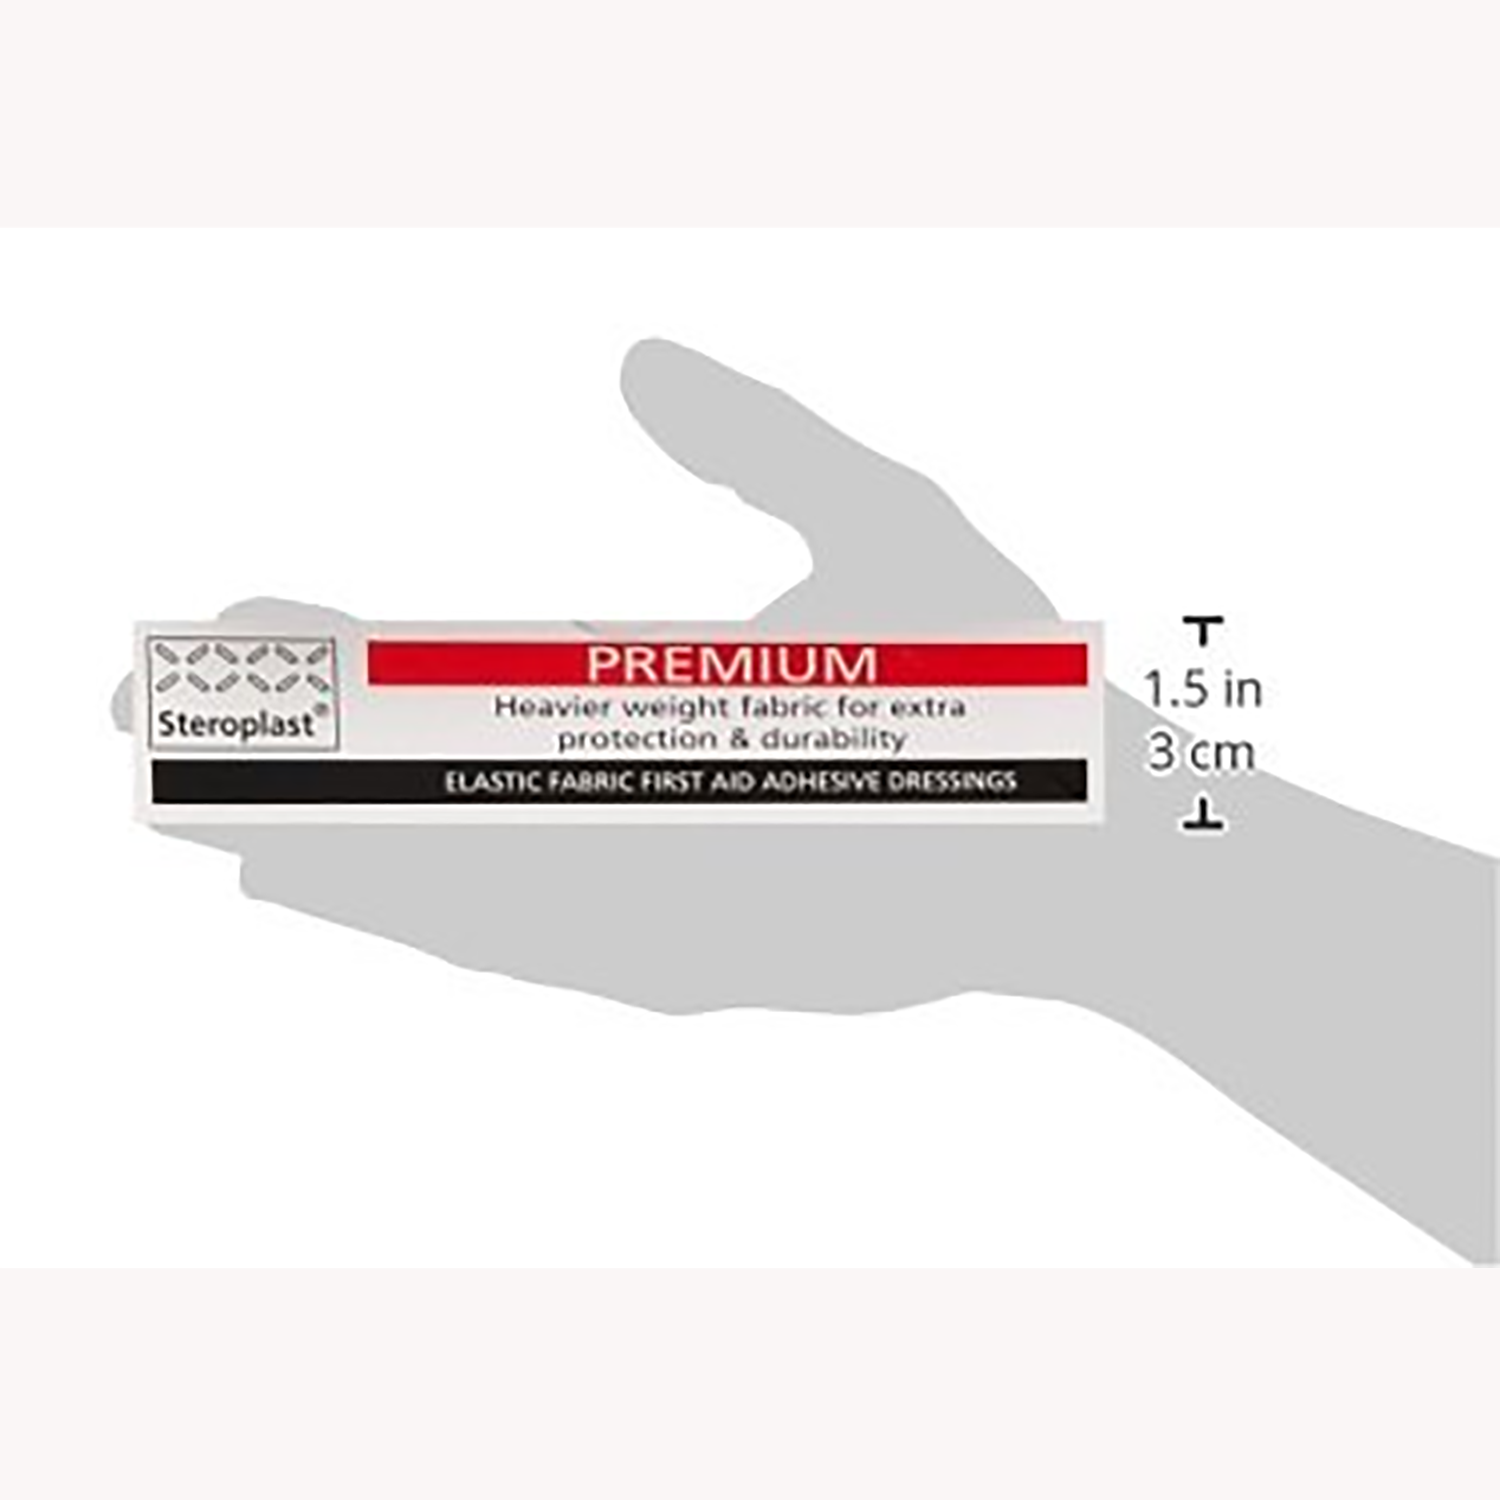 Steroplast Premium Elastic Fabric Plasters | Fingertip | 7.2 x 4.2cm | Pack of 50 (1)